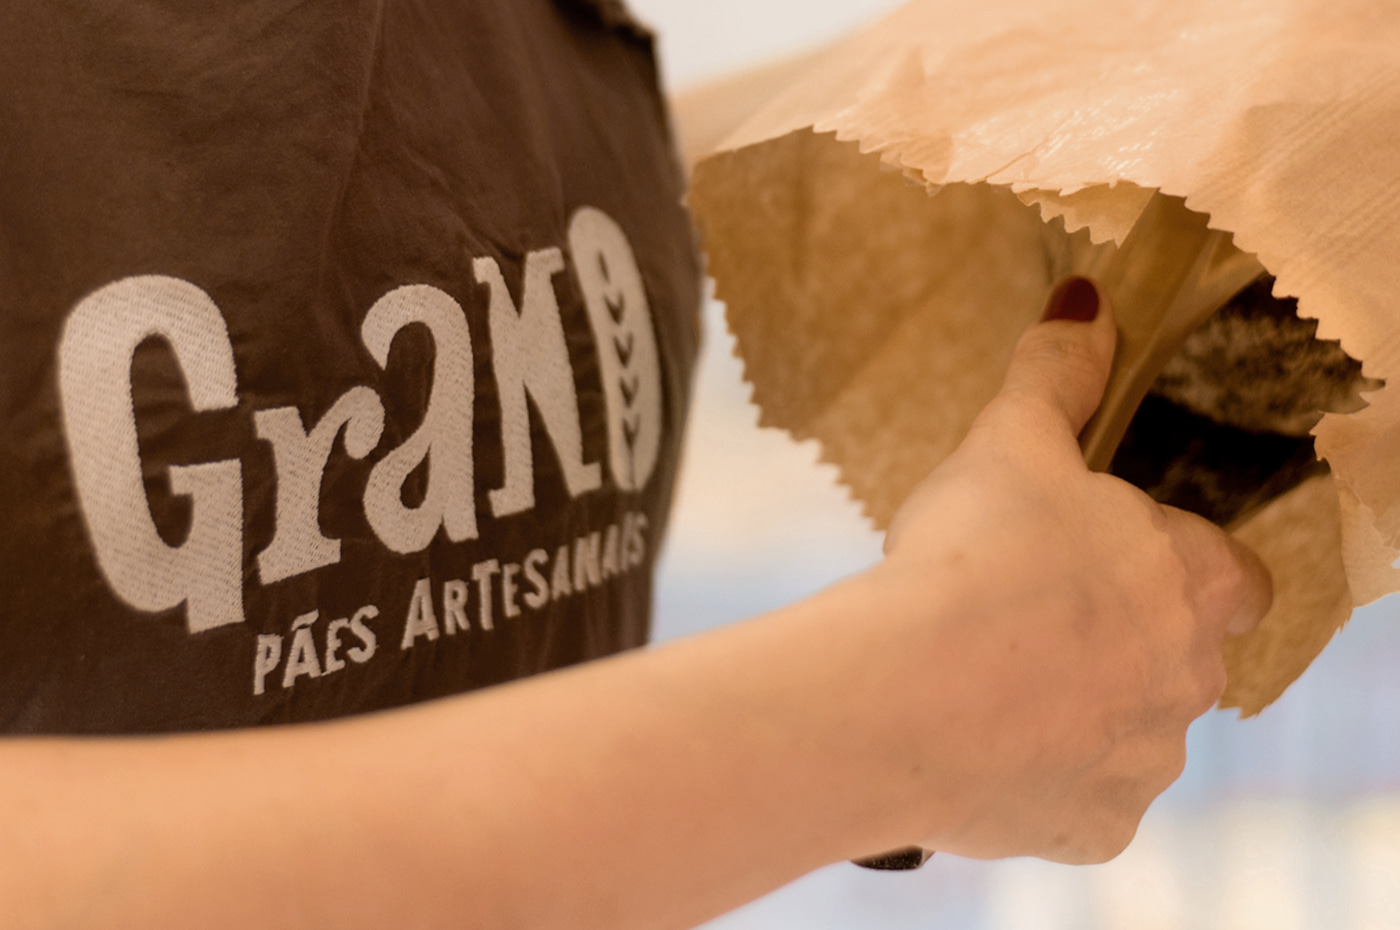 Tasty Visual Identity for the Artisan Breads Brand “Grano”